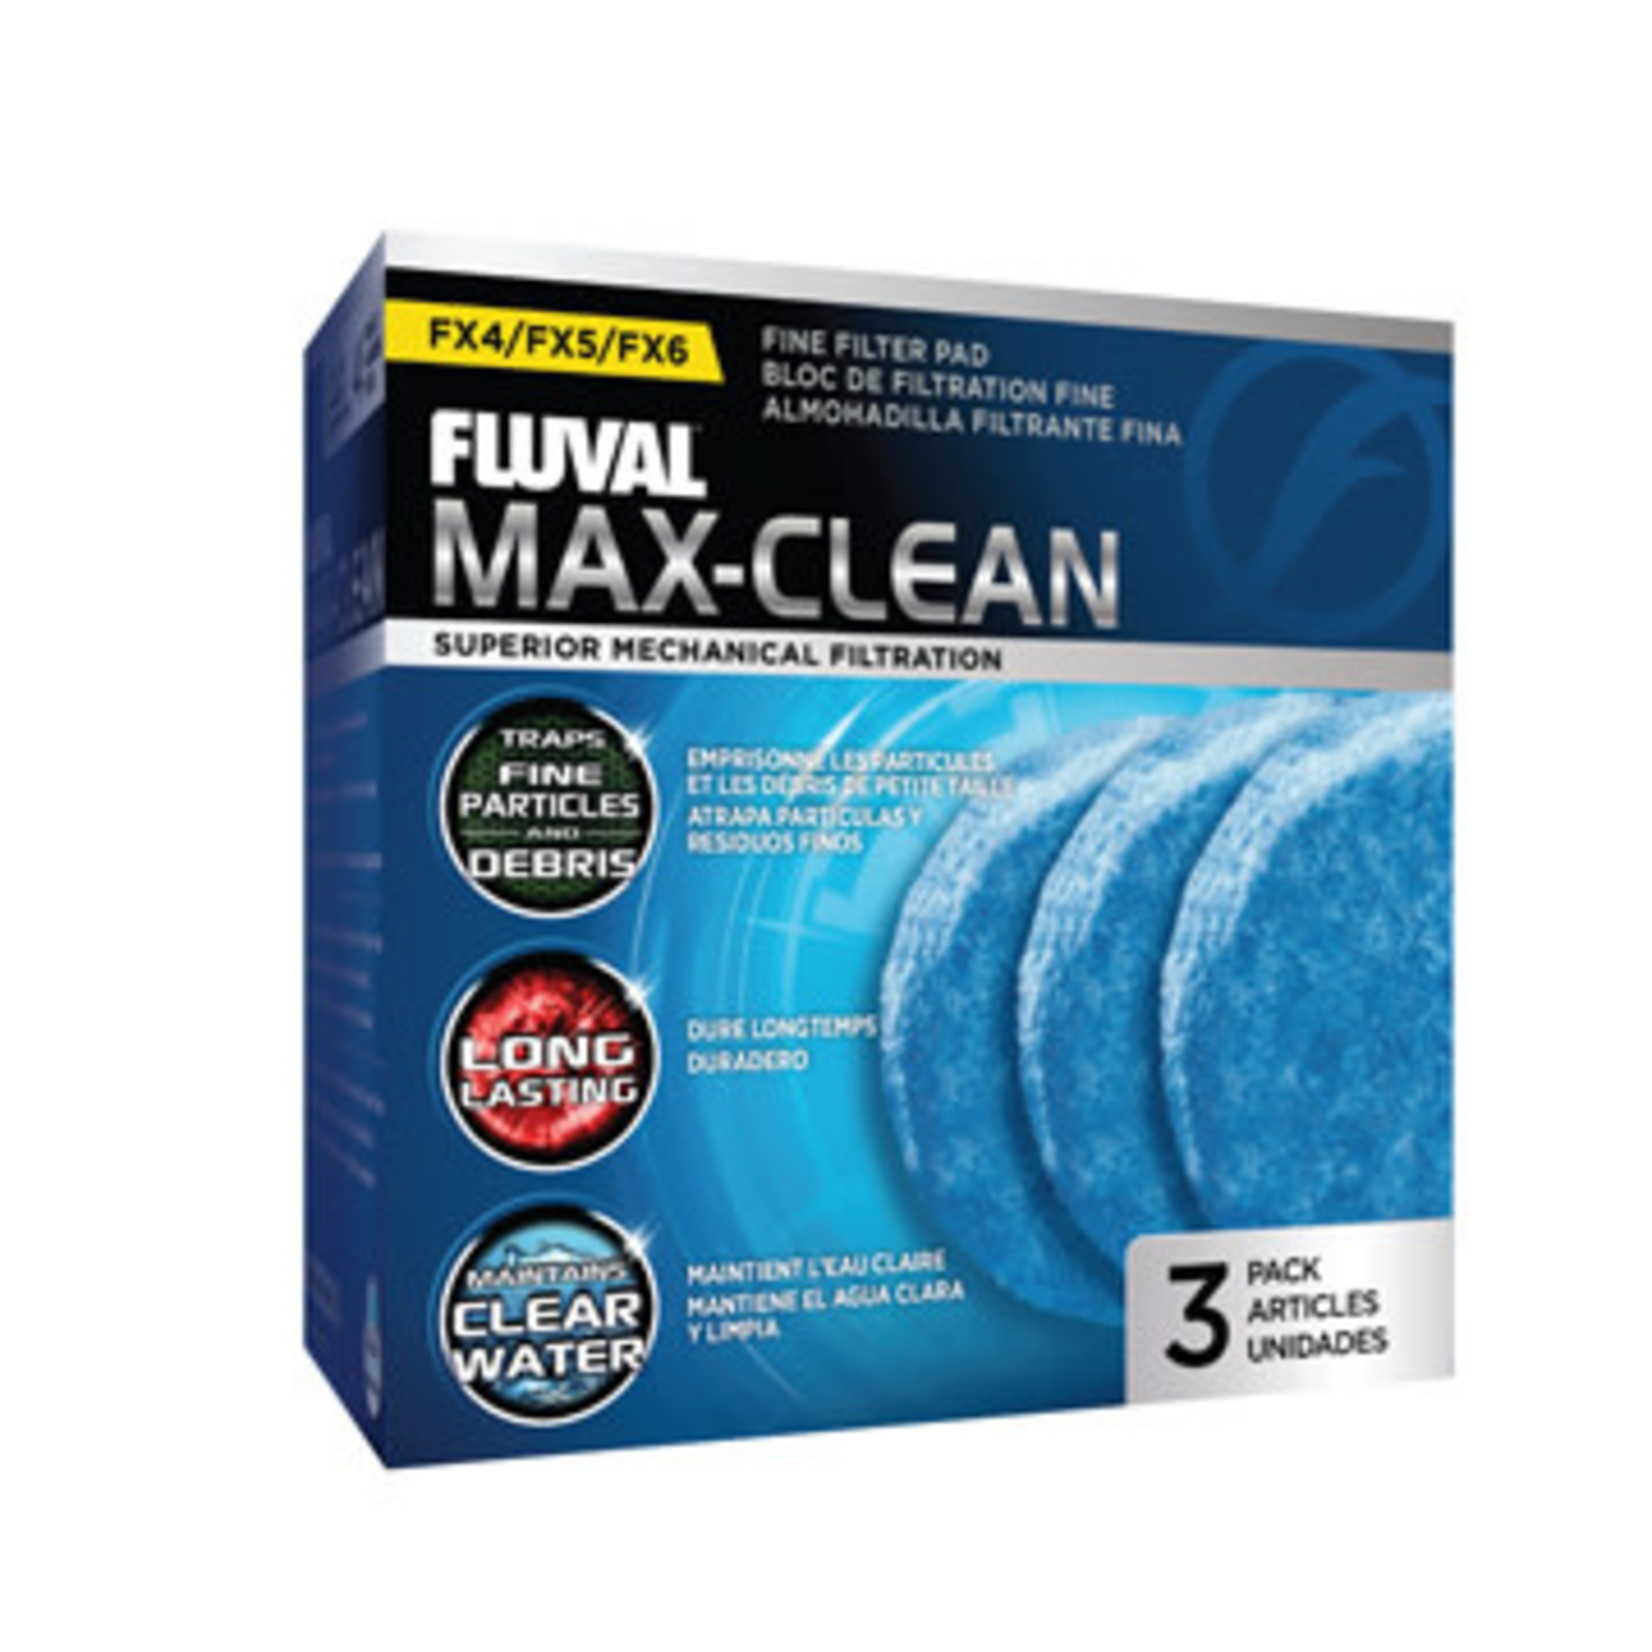 Fluval Fluval Max-Clean Fine Filter Pads - 3 pack